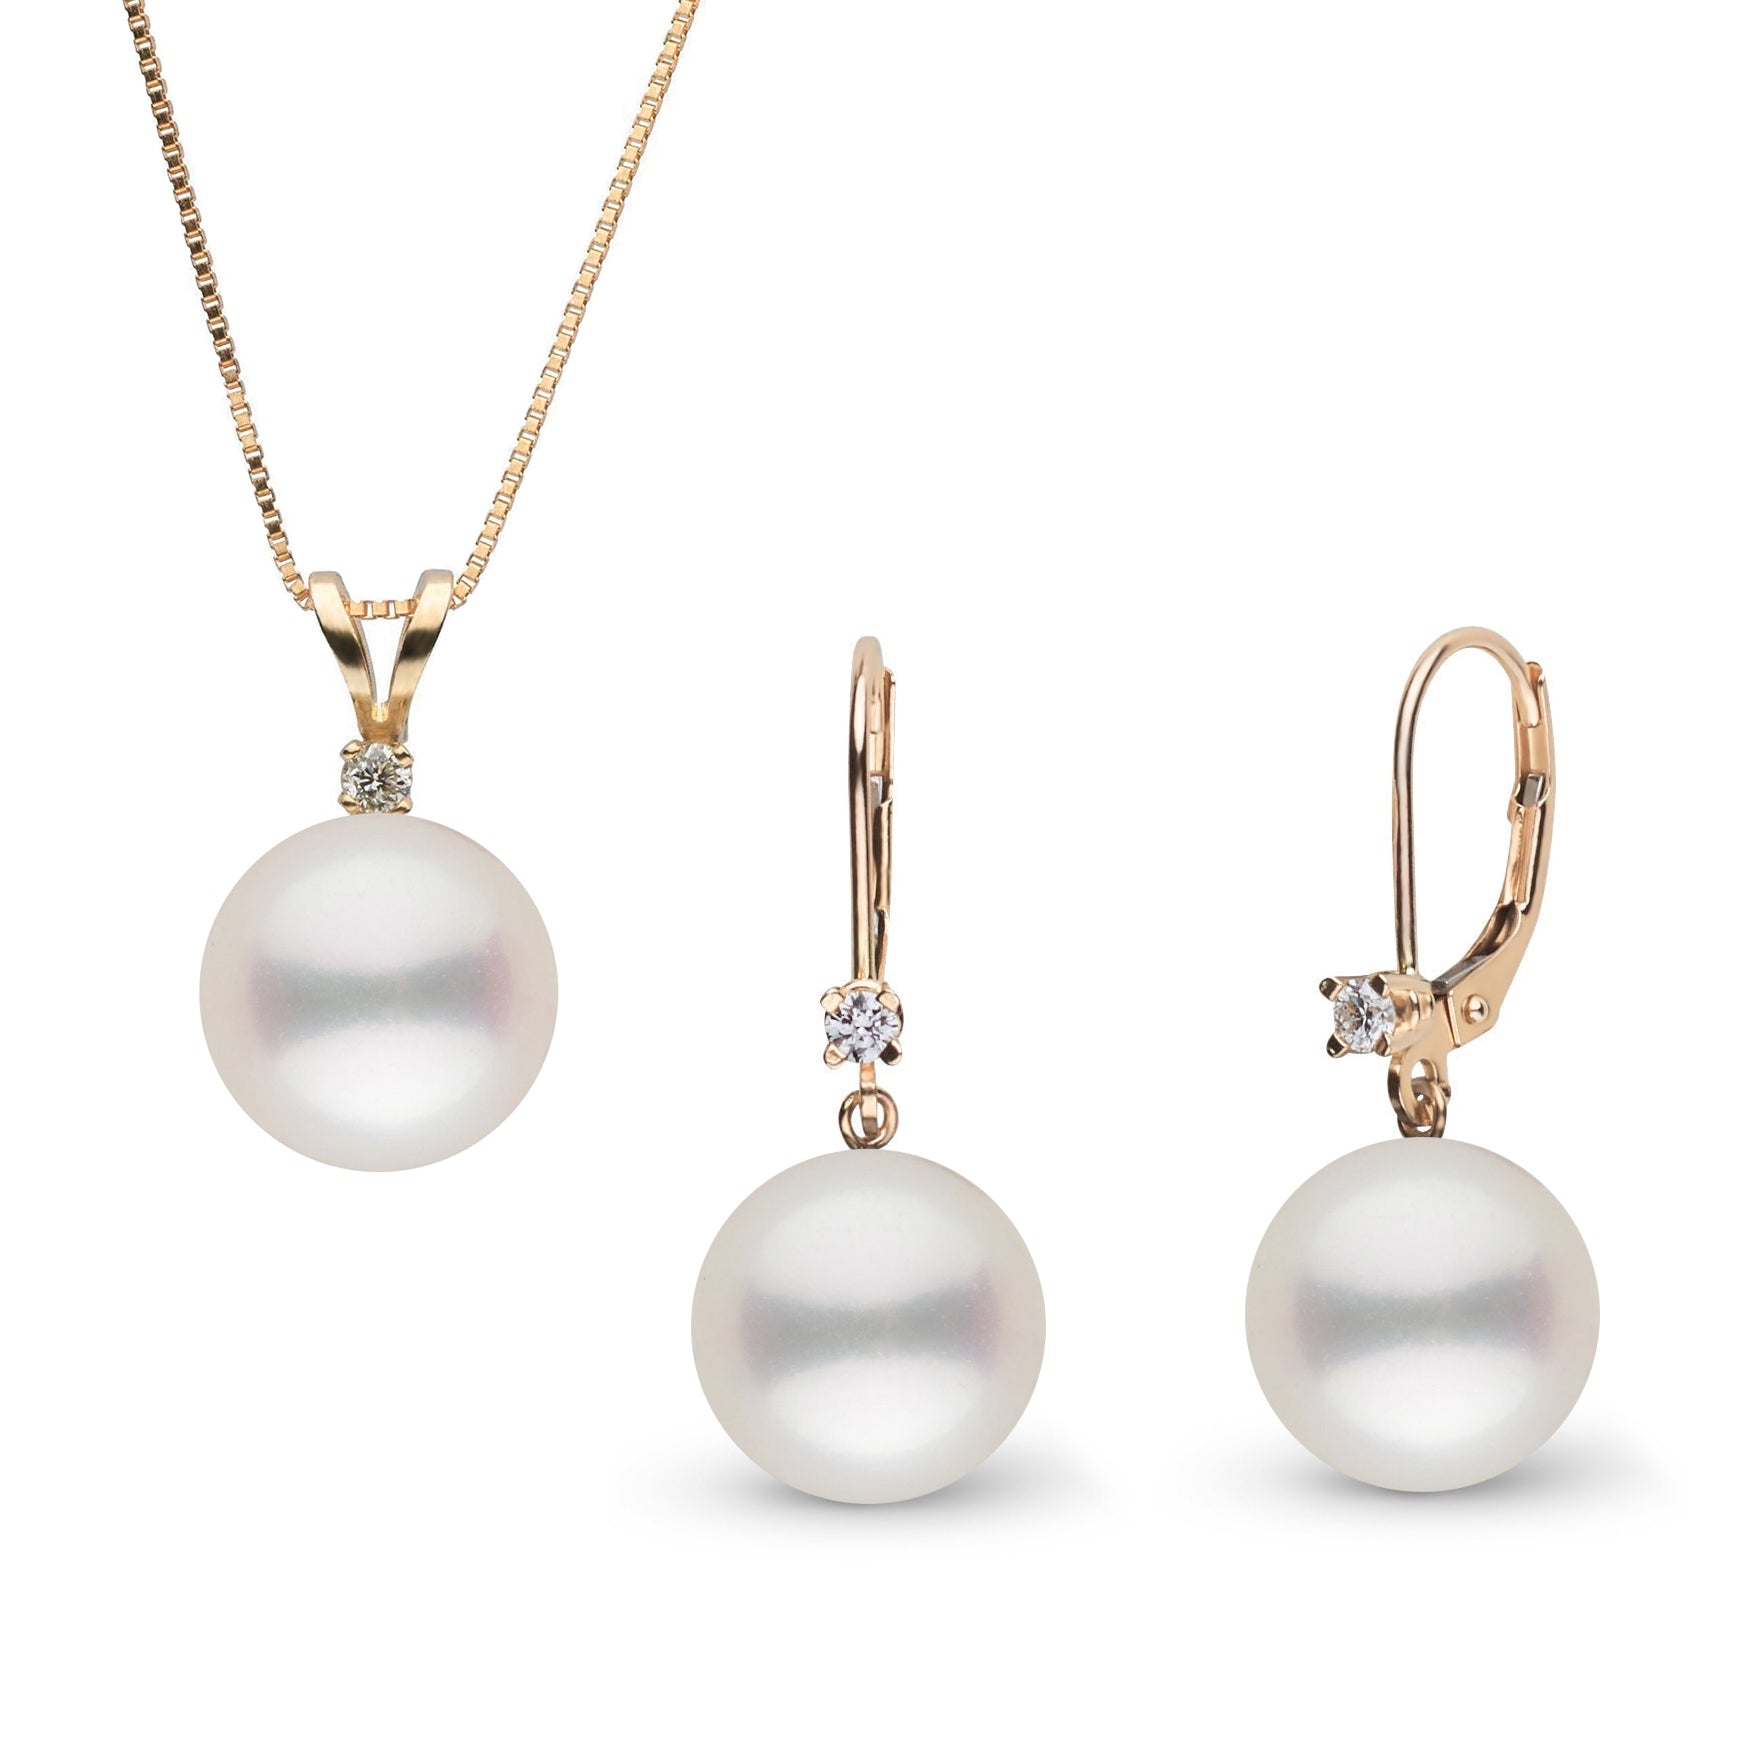 8.5-9.0 mm White Freshadama Pearl and Diamond Harmony Pendant and Earrings Set